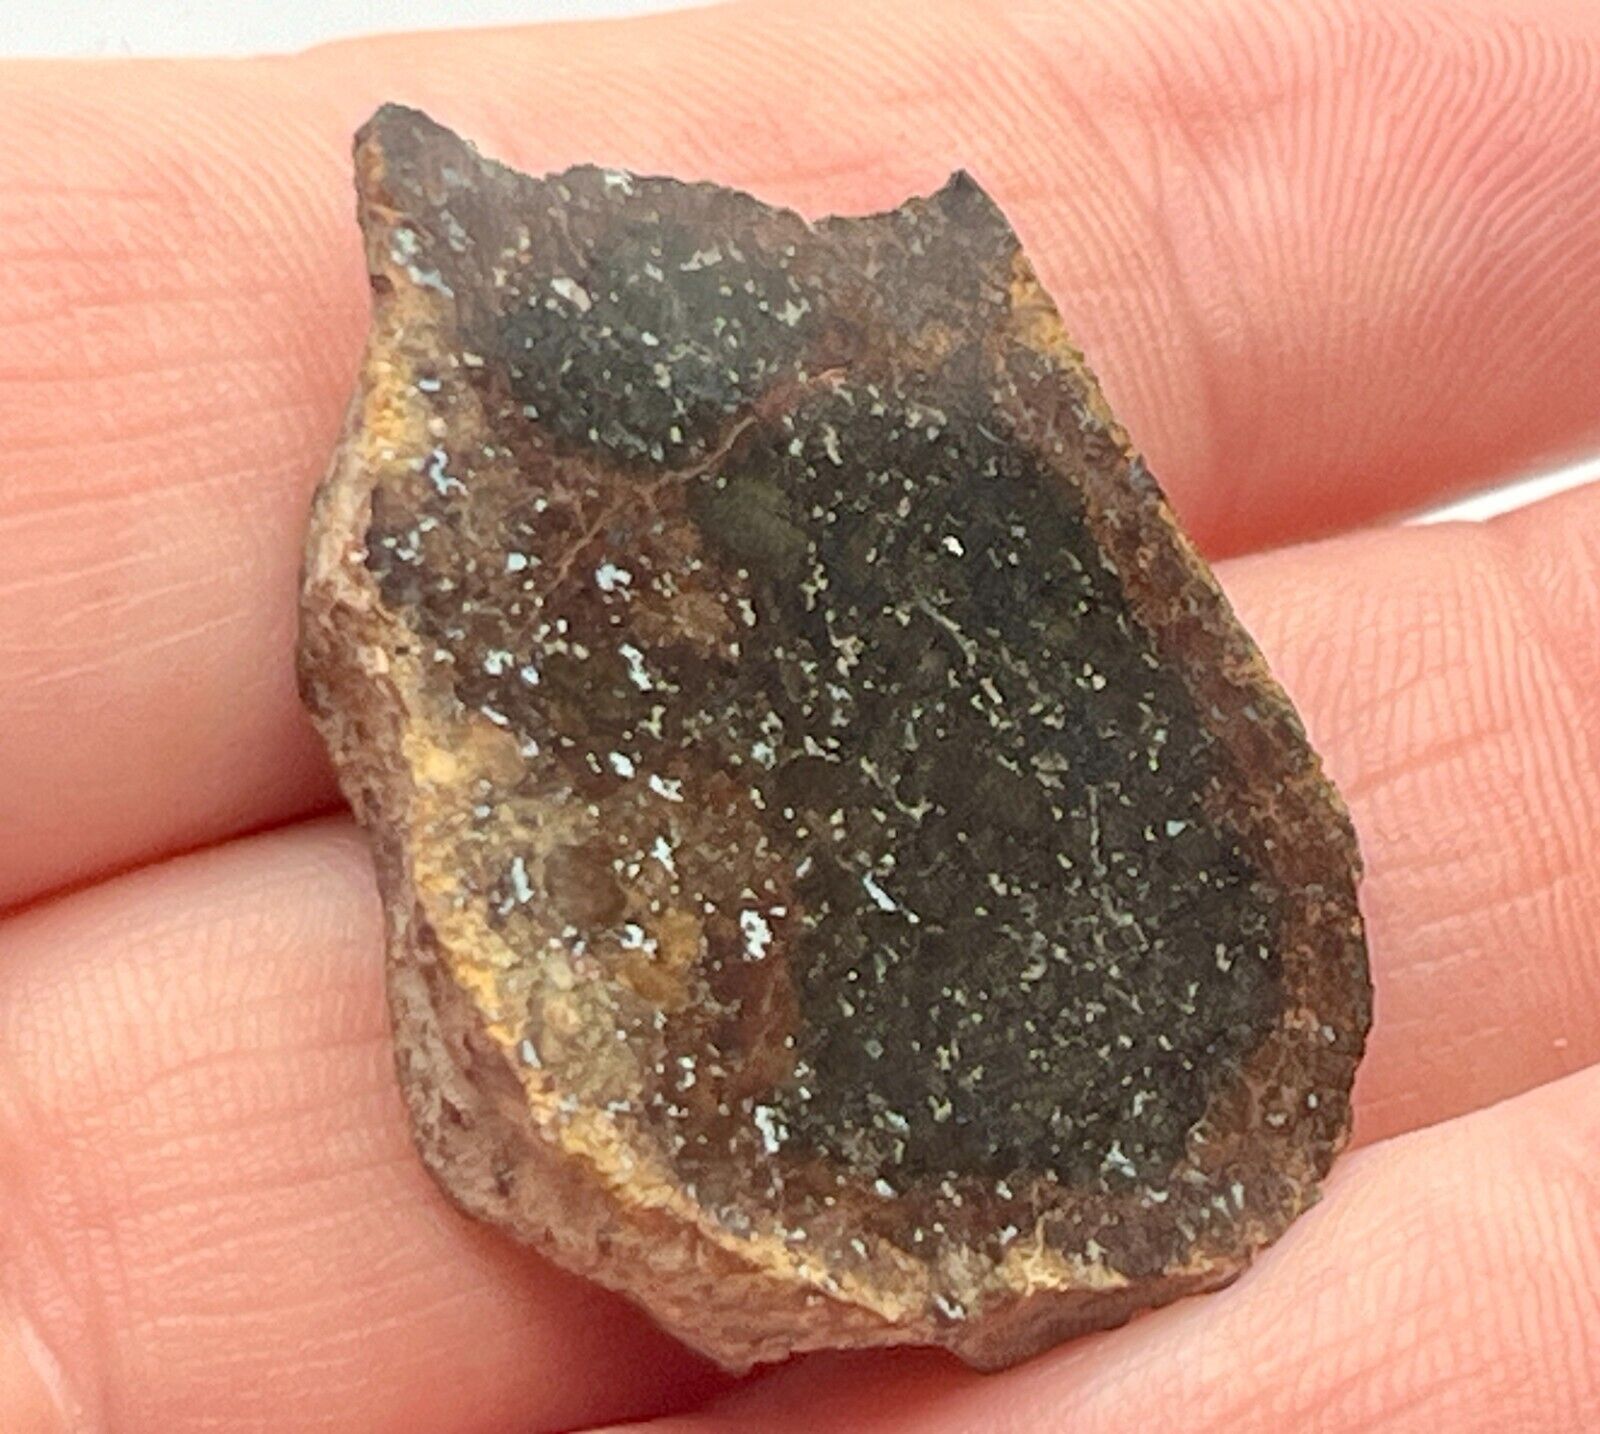 GOLD BASIN 9.743g Polished Meteorite End Cut, L4 Chondrite, IMCA Sellers